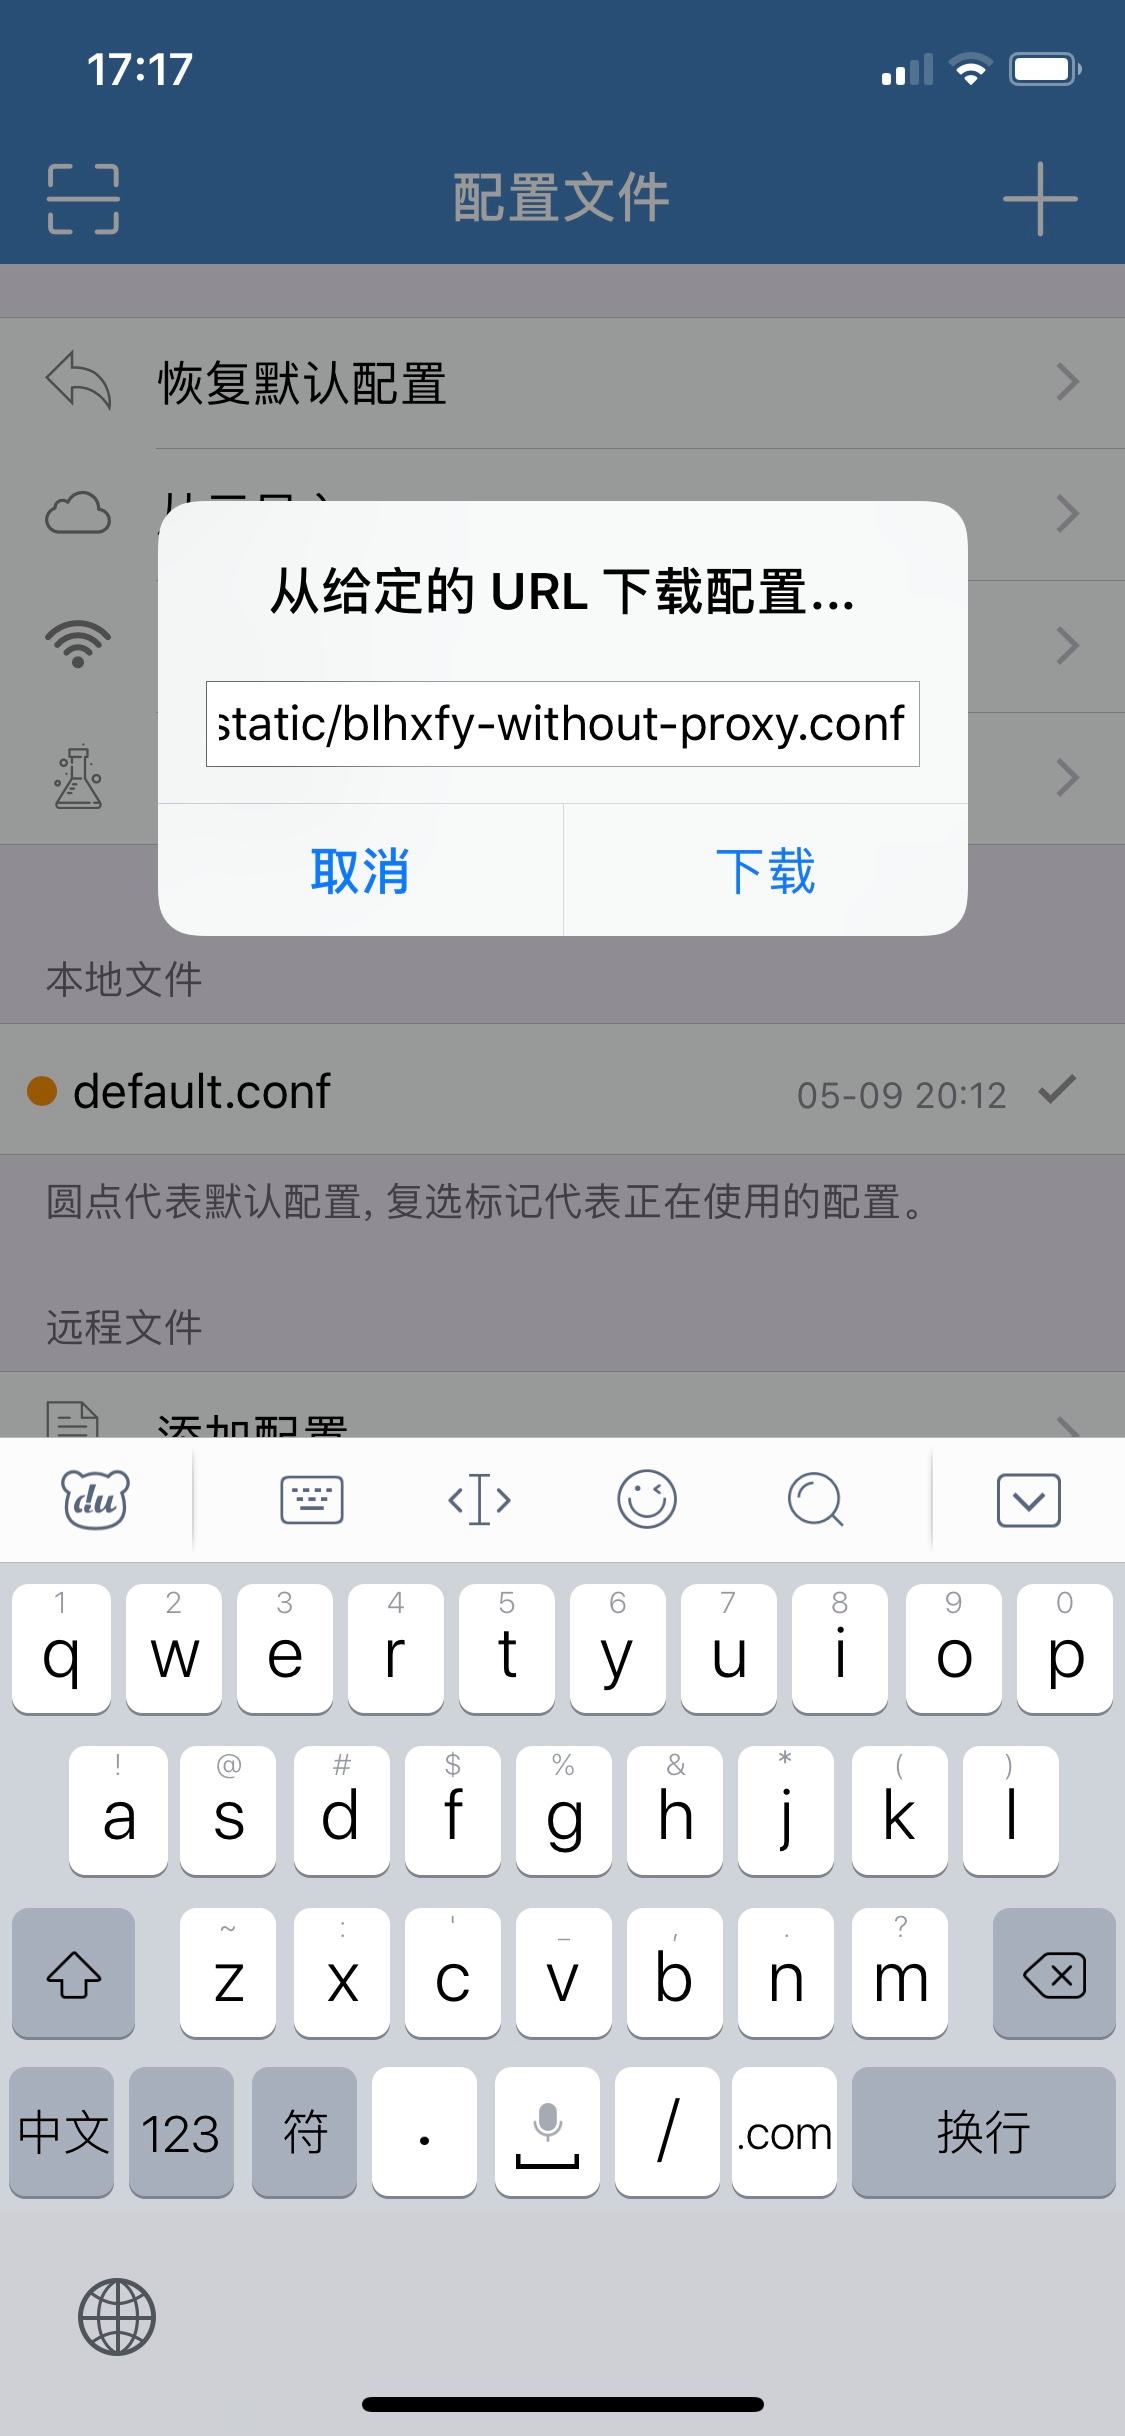 telegreat汉化链接ios-telegreat中文手机版下载ios